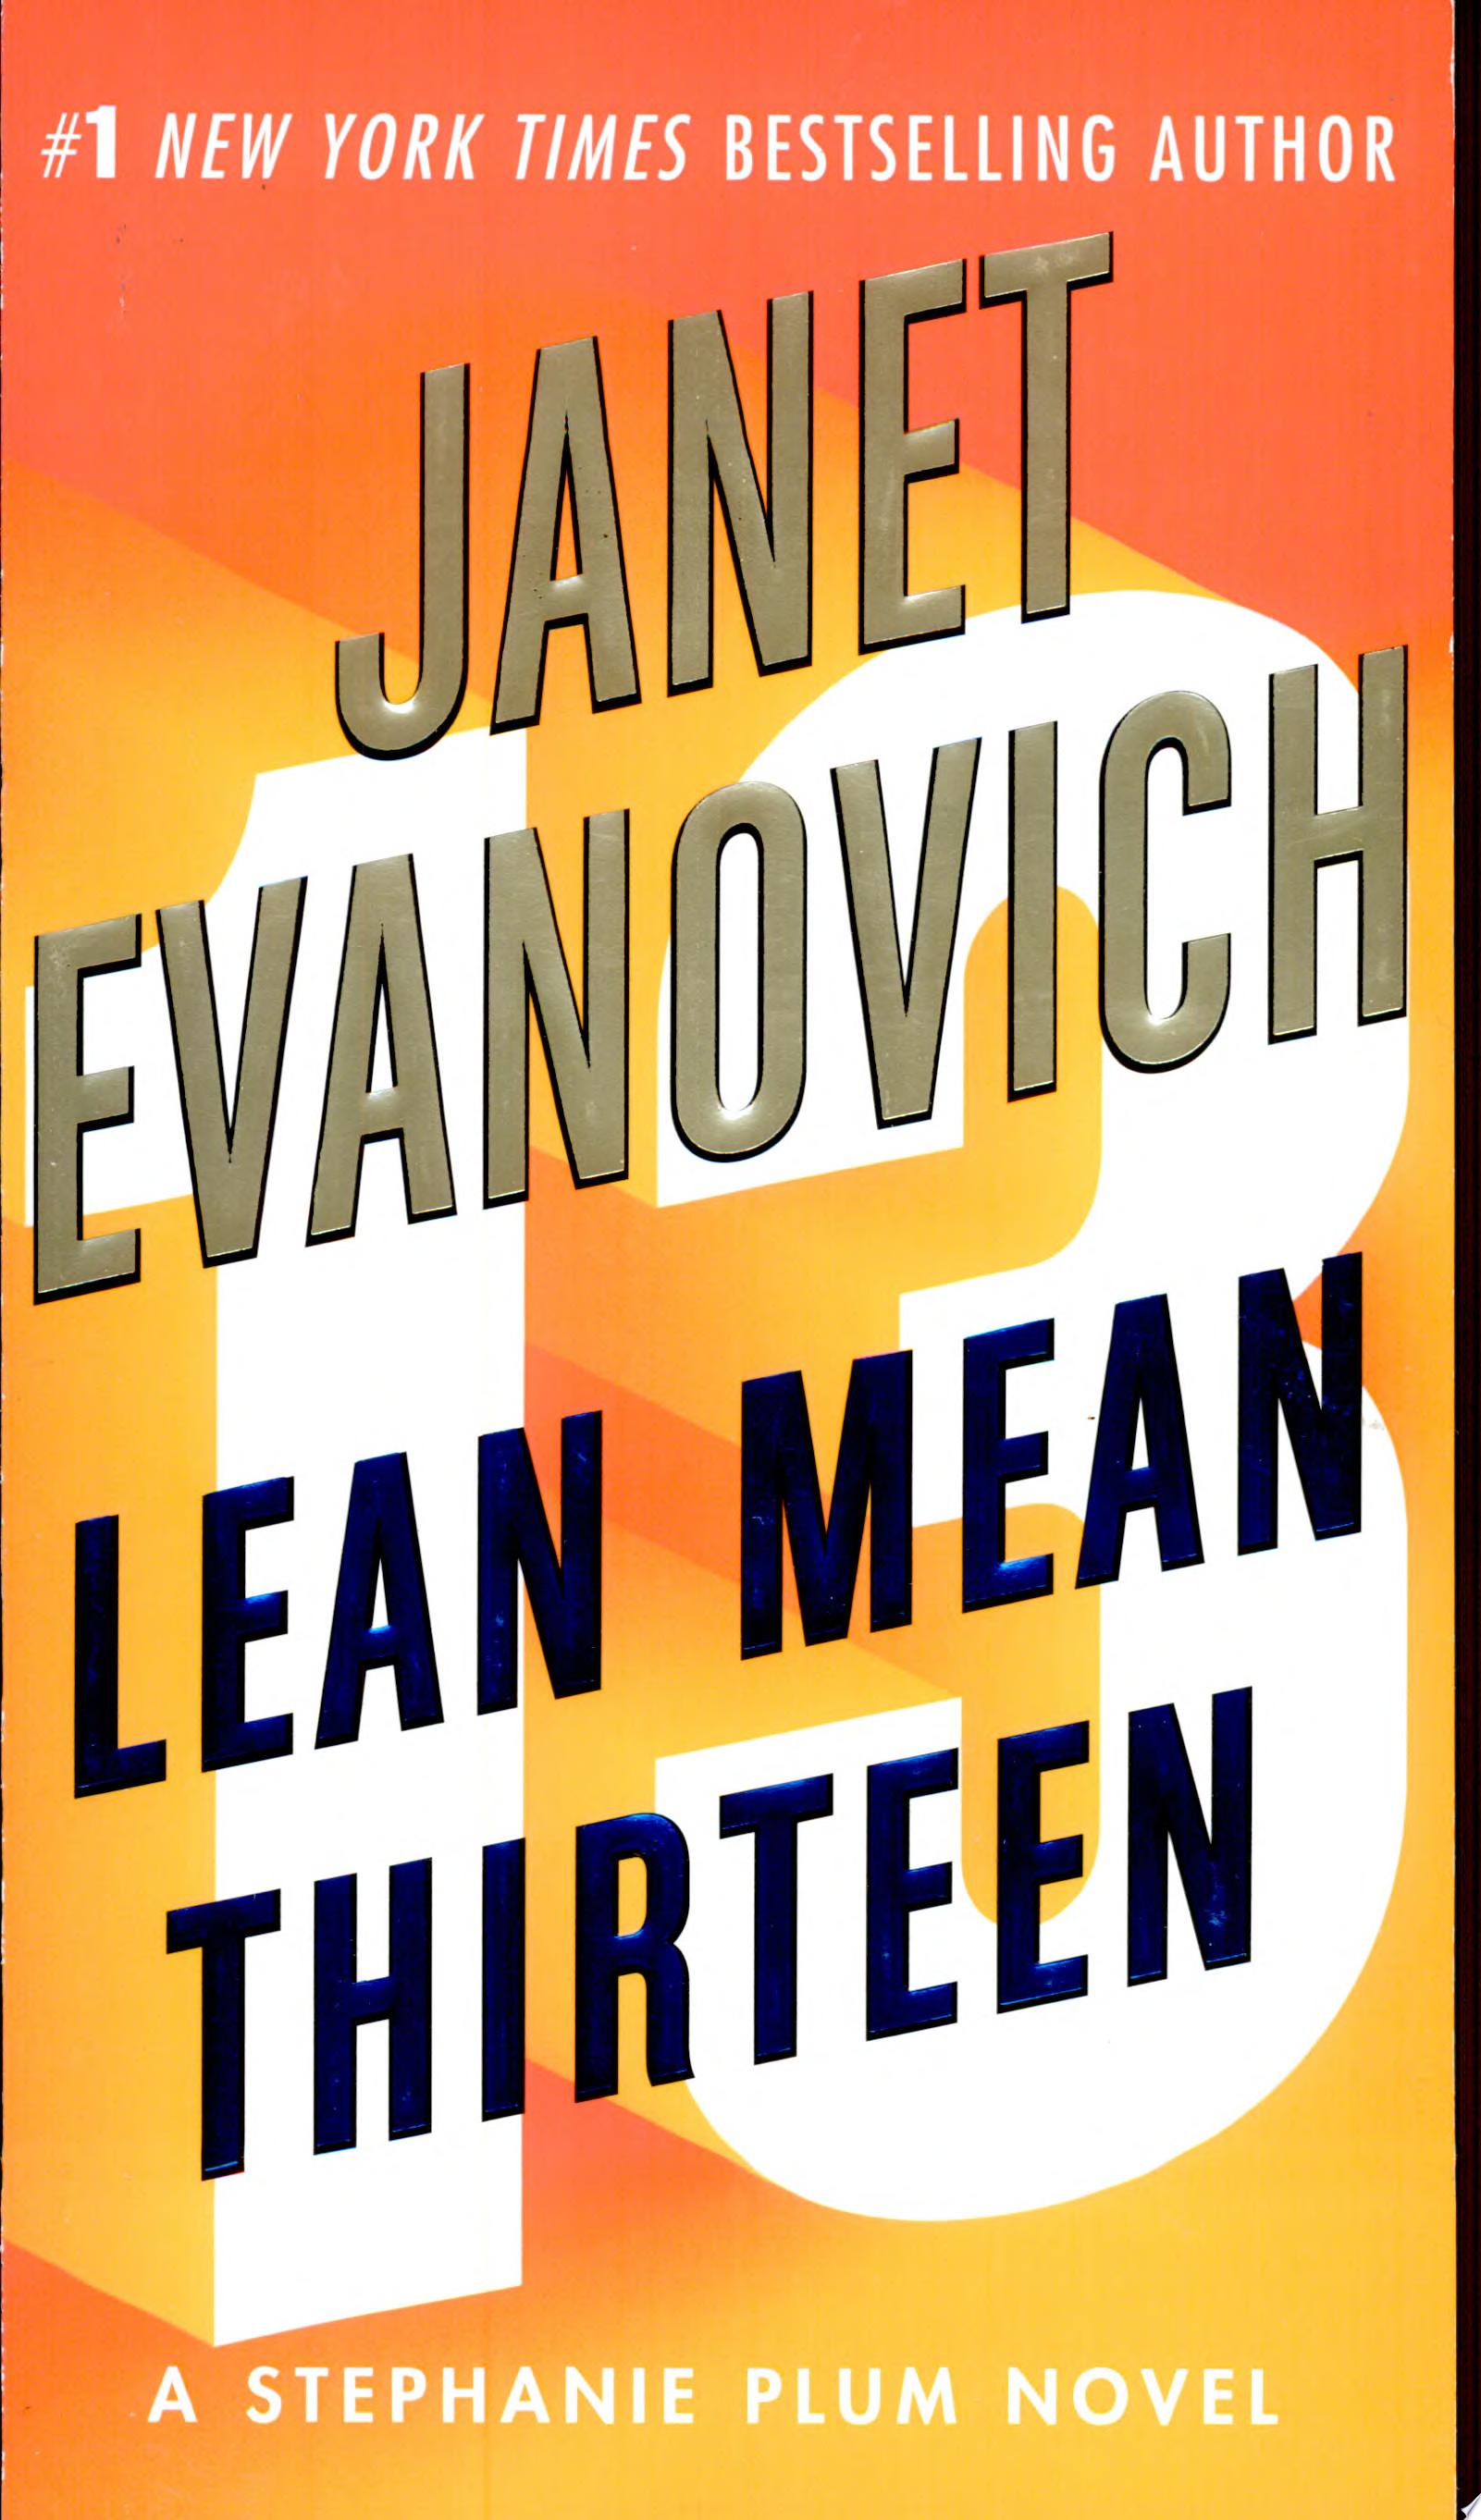 Image for "Lean Mean Thirteen"